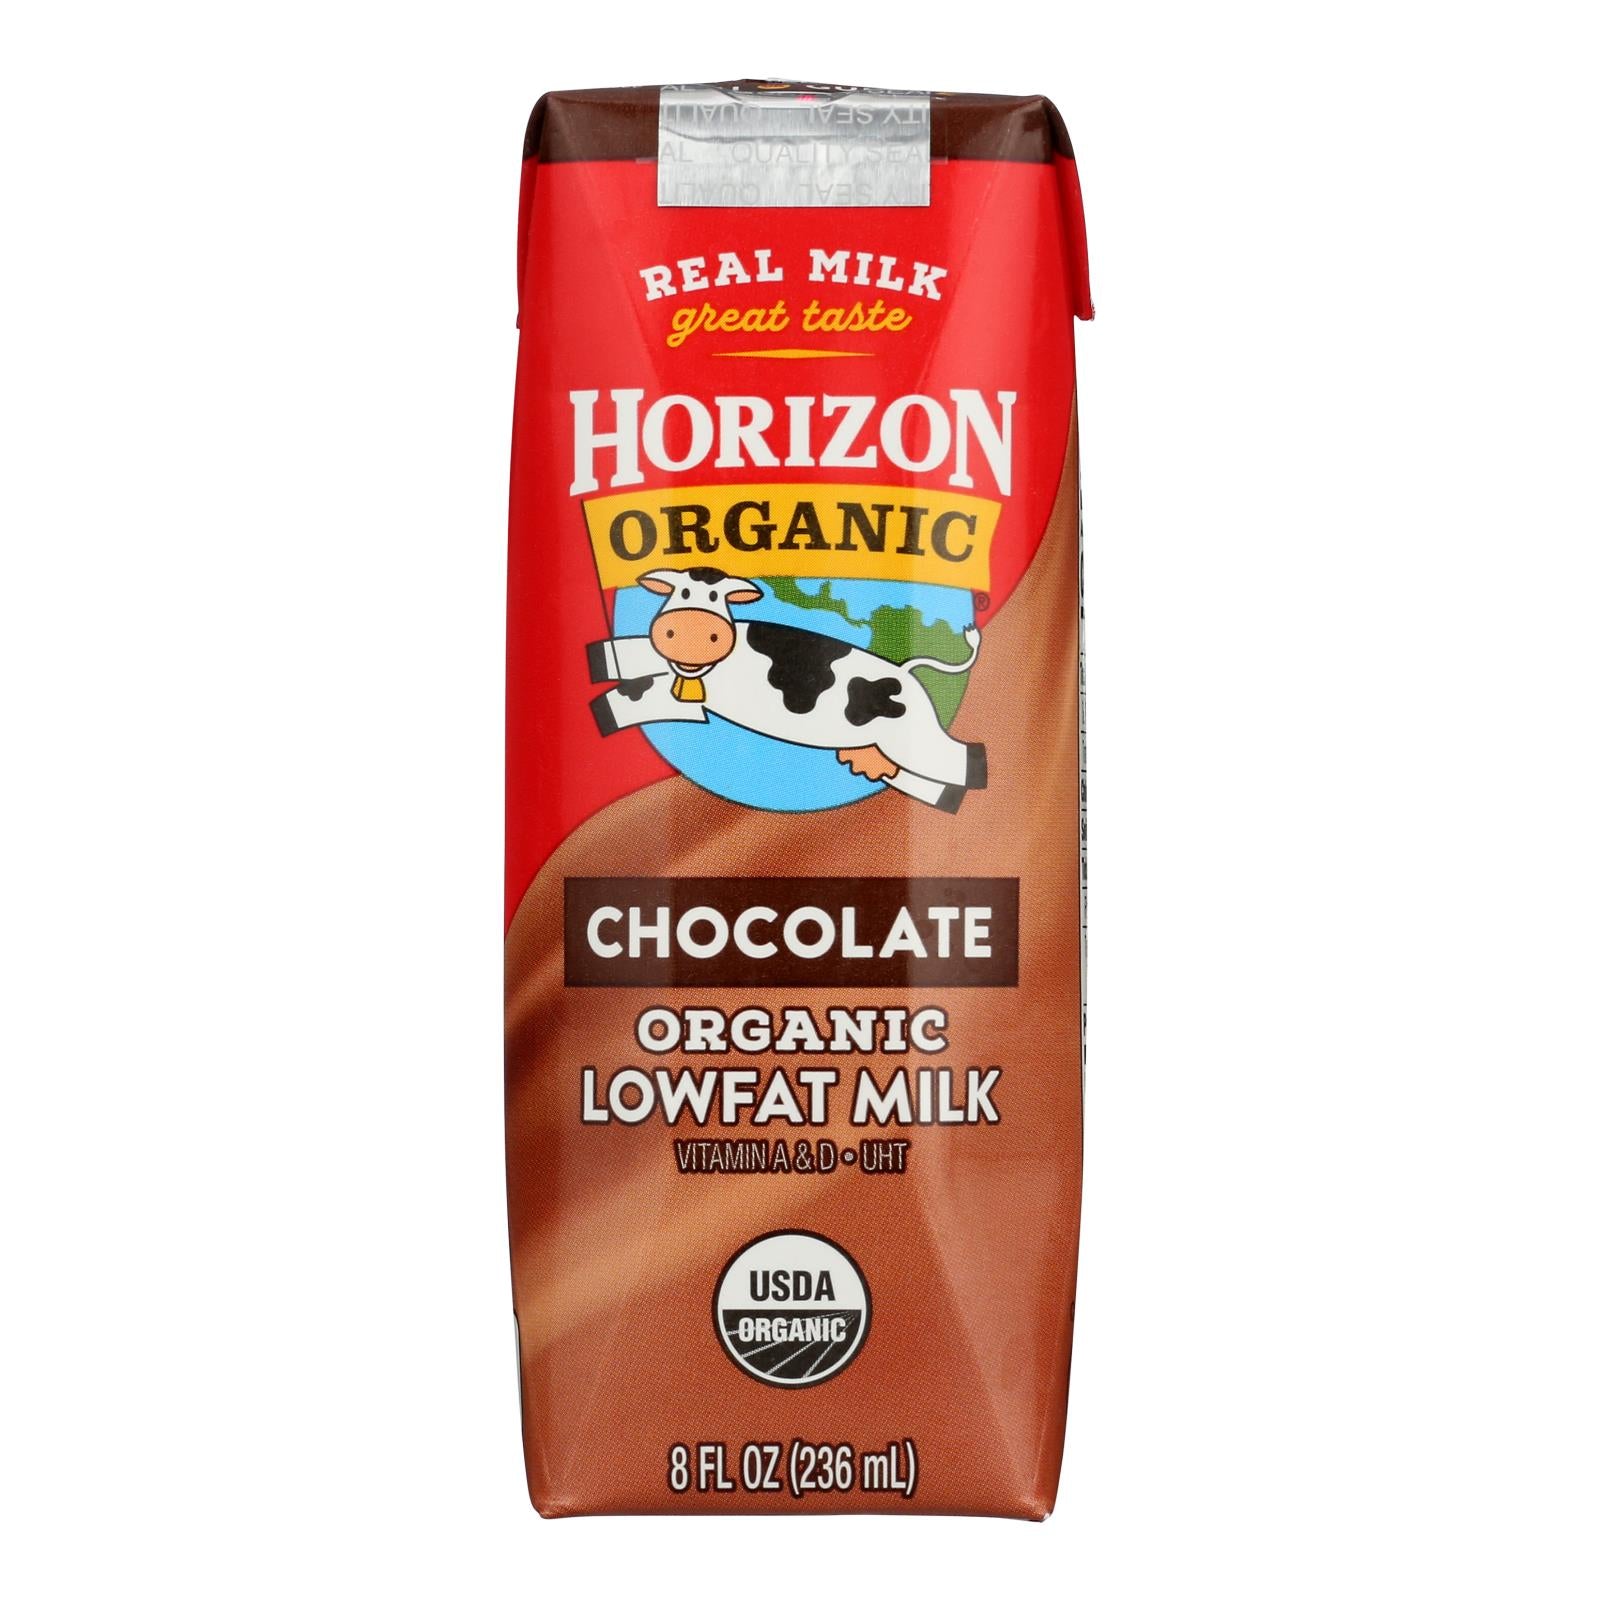 Horizon Lowfat Chocolate Milk  - 1 Each - 12/8 FZ